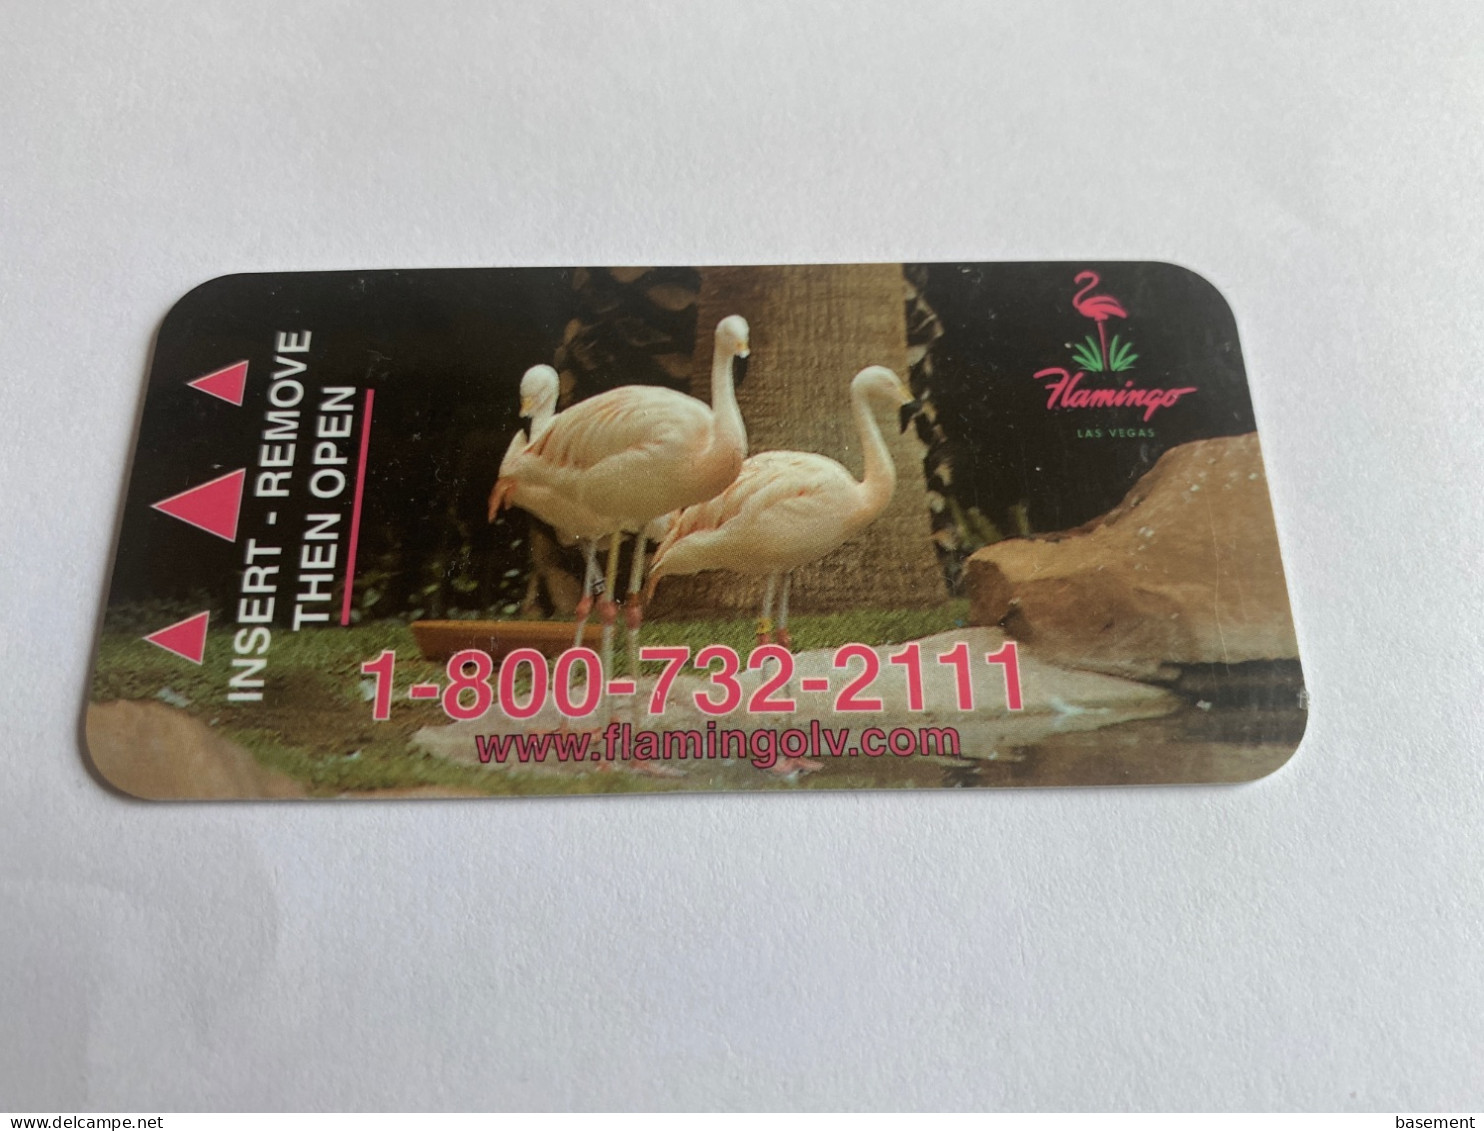 - 1 - Flamingo LAS Vegas Hotel Key Card - Cartas De Hotels